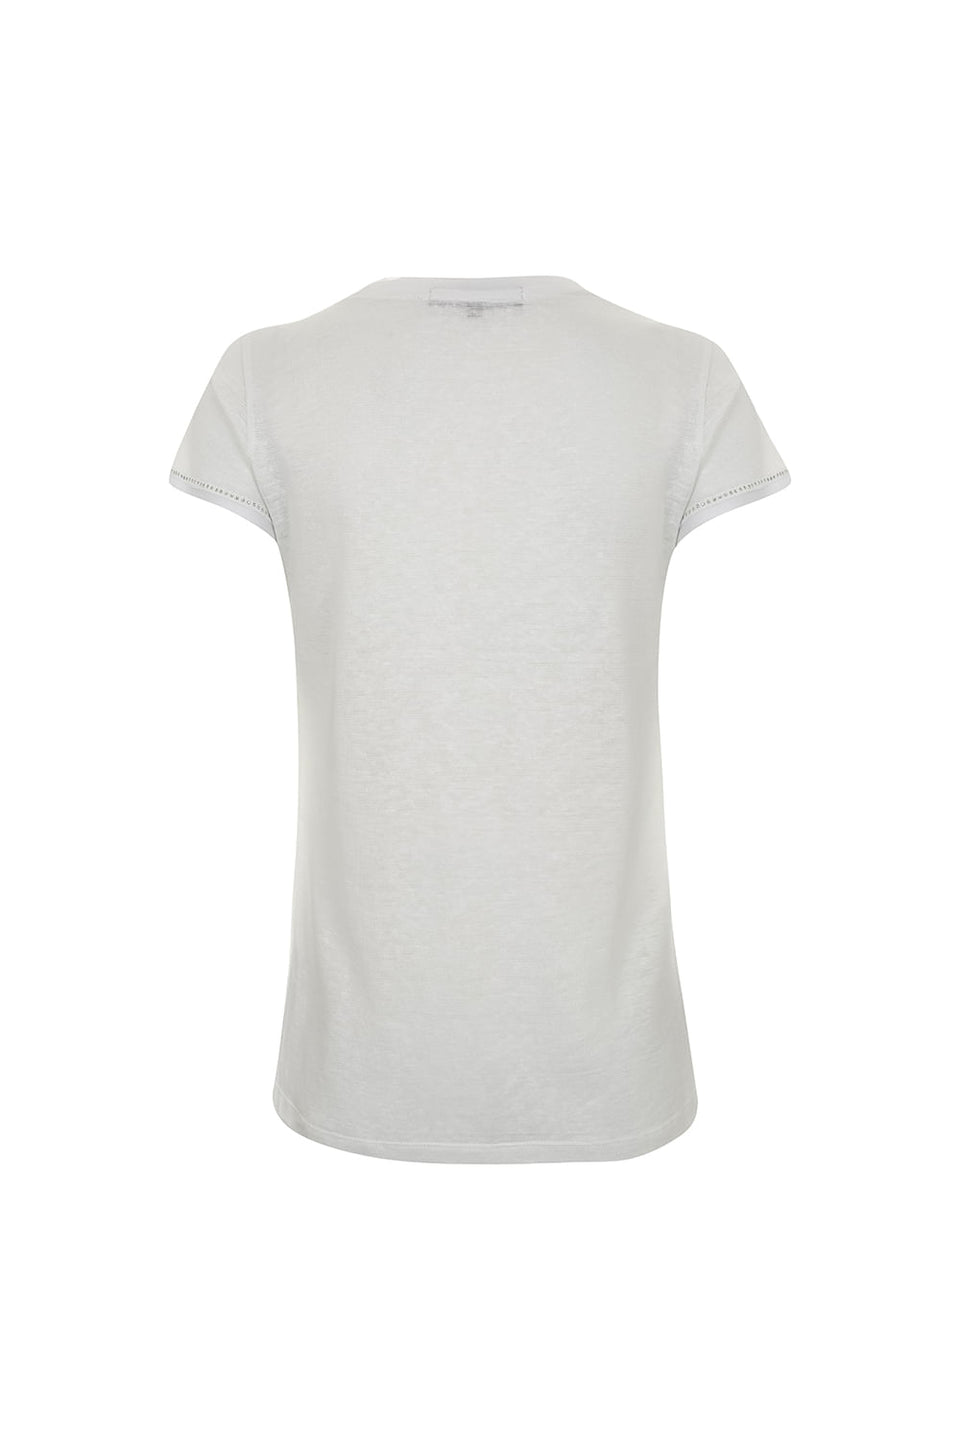 Camiseta Liberté Branco